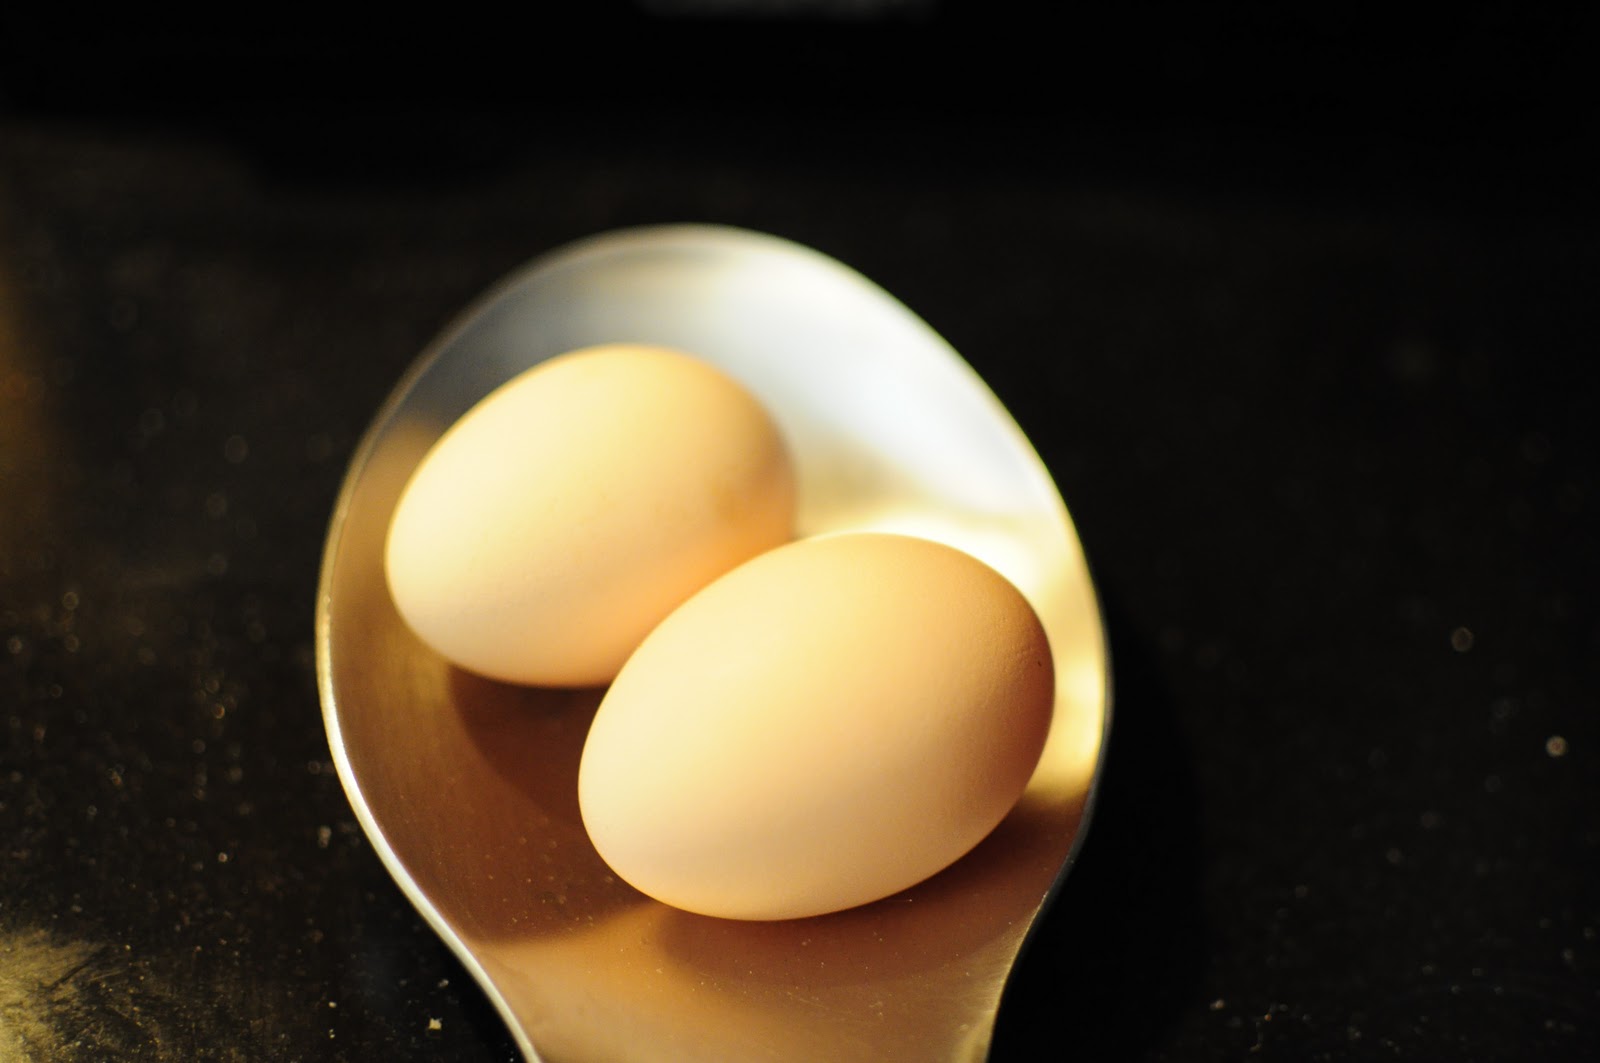 http://2.bp.blogspot.com/-b-ItlGavsjY/TWKw1V-Hk9I/AAAAAAAACOg/h436lopUcgk/s1600/two+eggs+in+spoon+rest.JPG